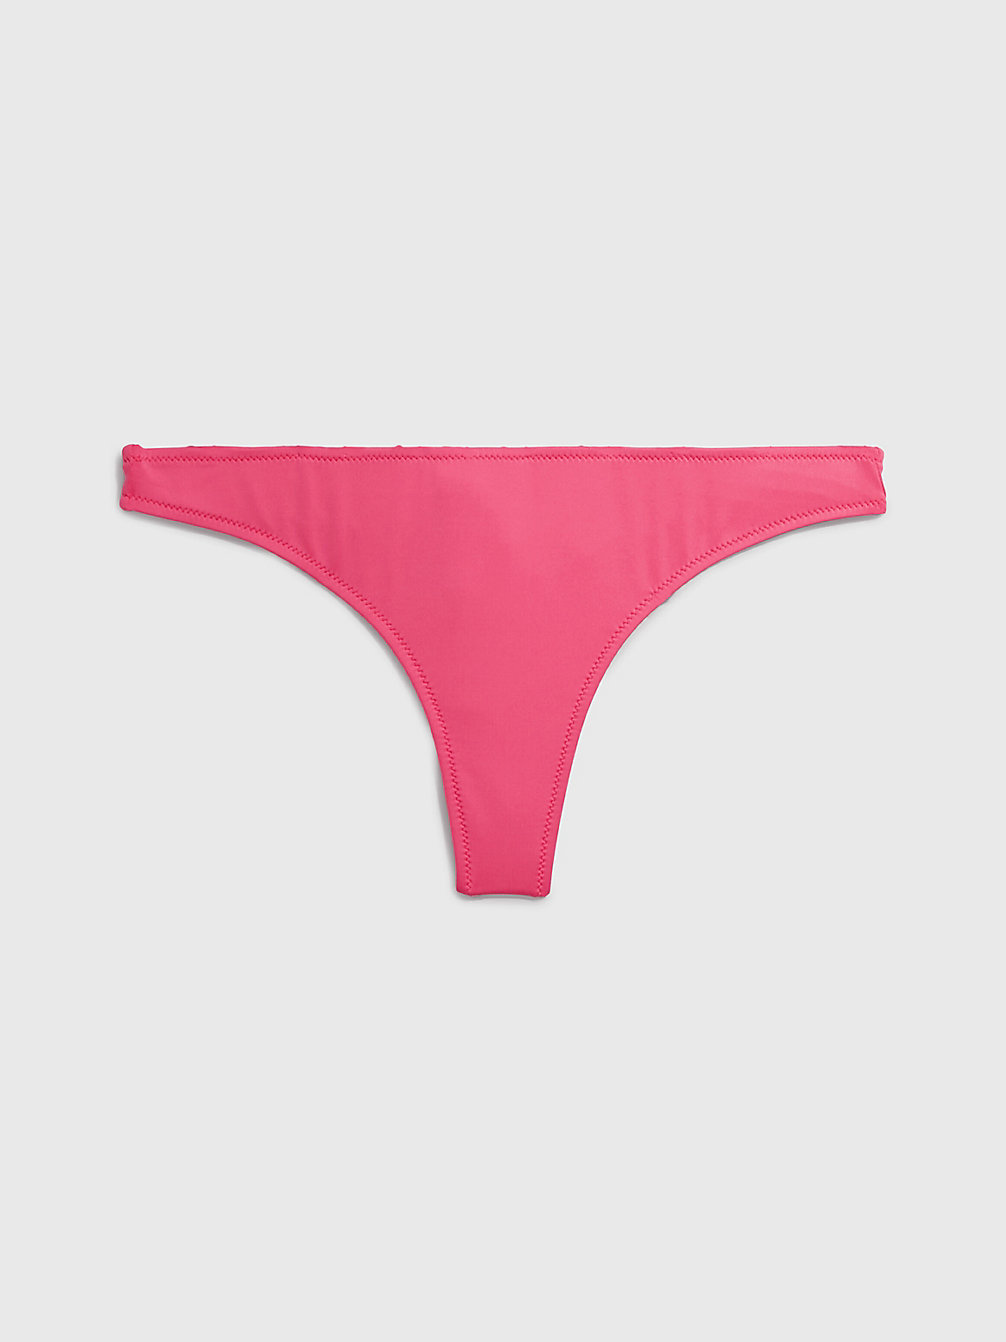 PINK FLASH Thong Bikini Bottoms - CK Monogram undefined women Calvin Klein